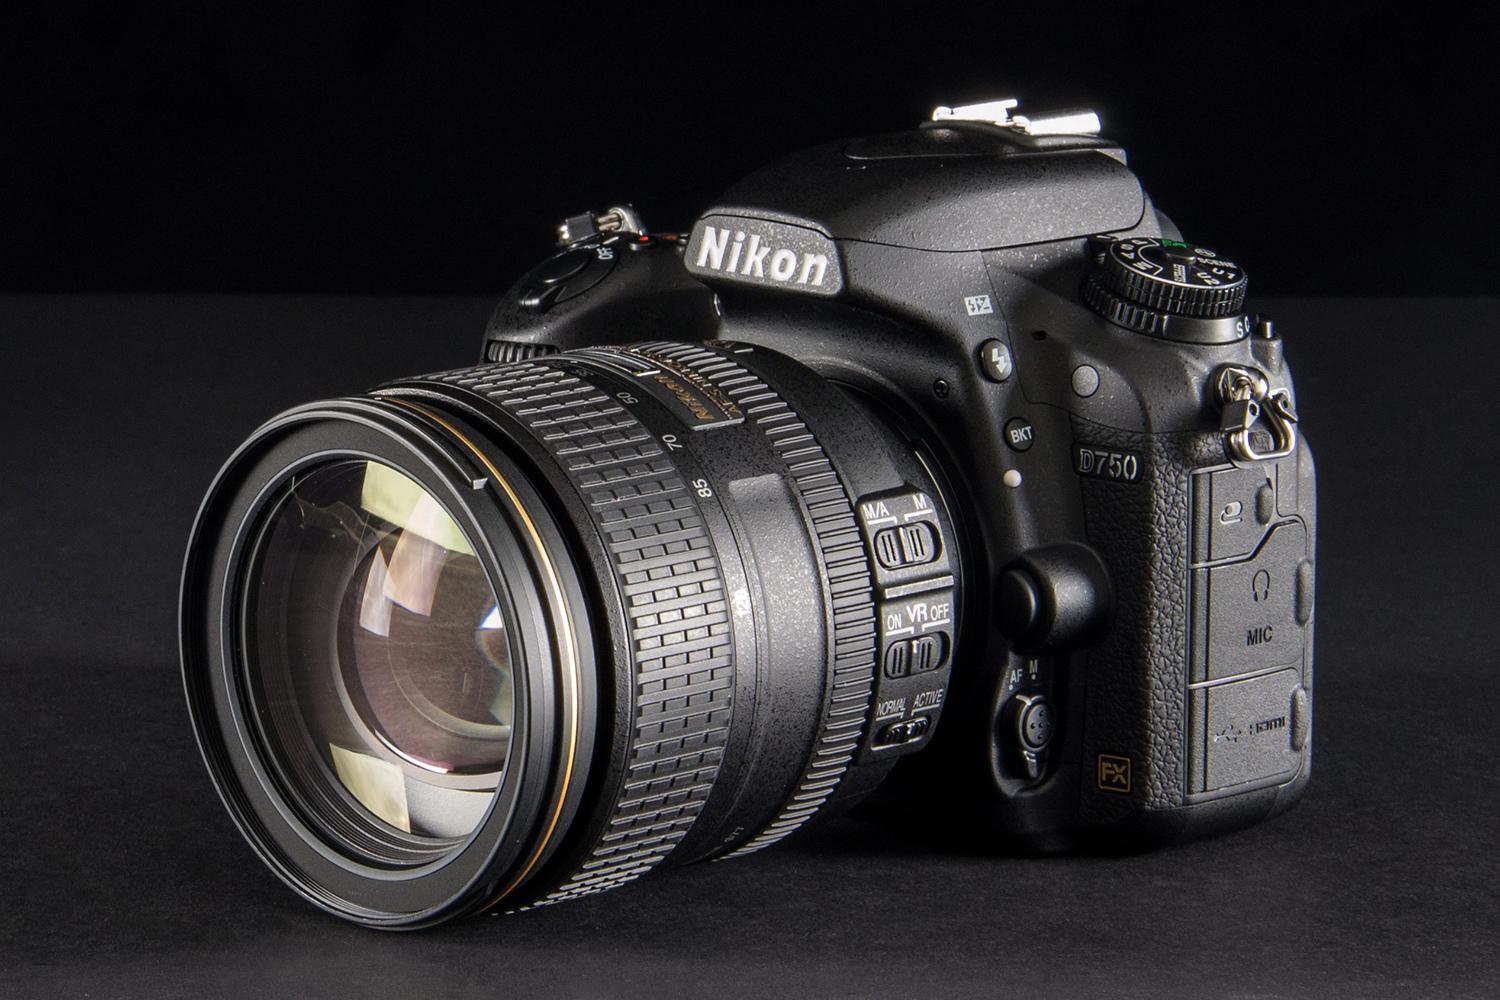 Nikon D750 review: Nikon D750 isn't cheap, but offers a great full-frame  value - CNET